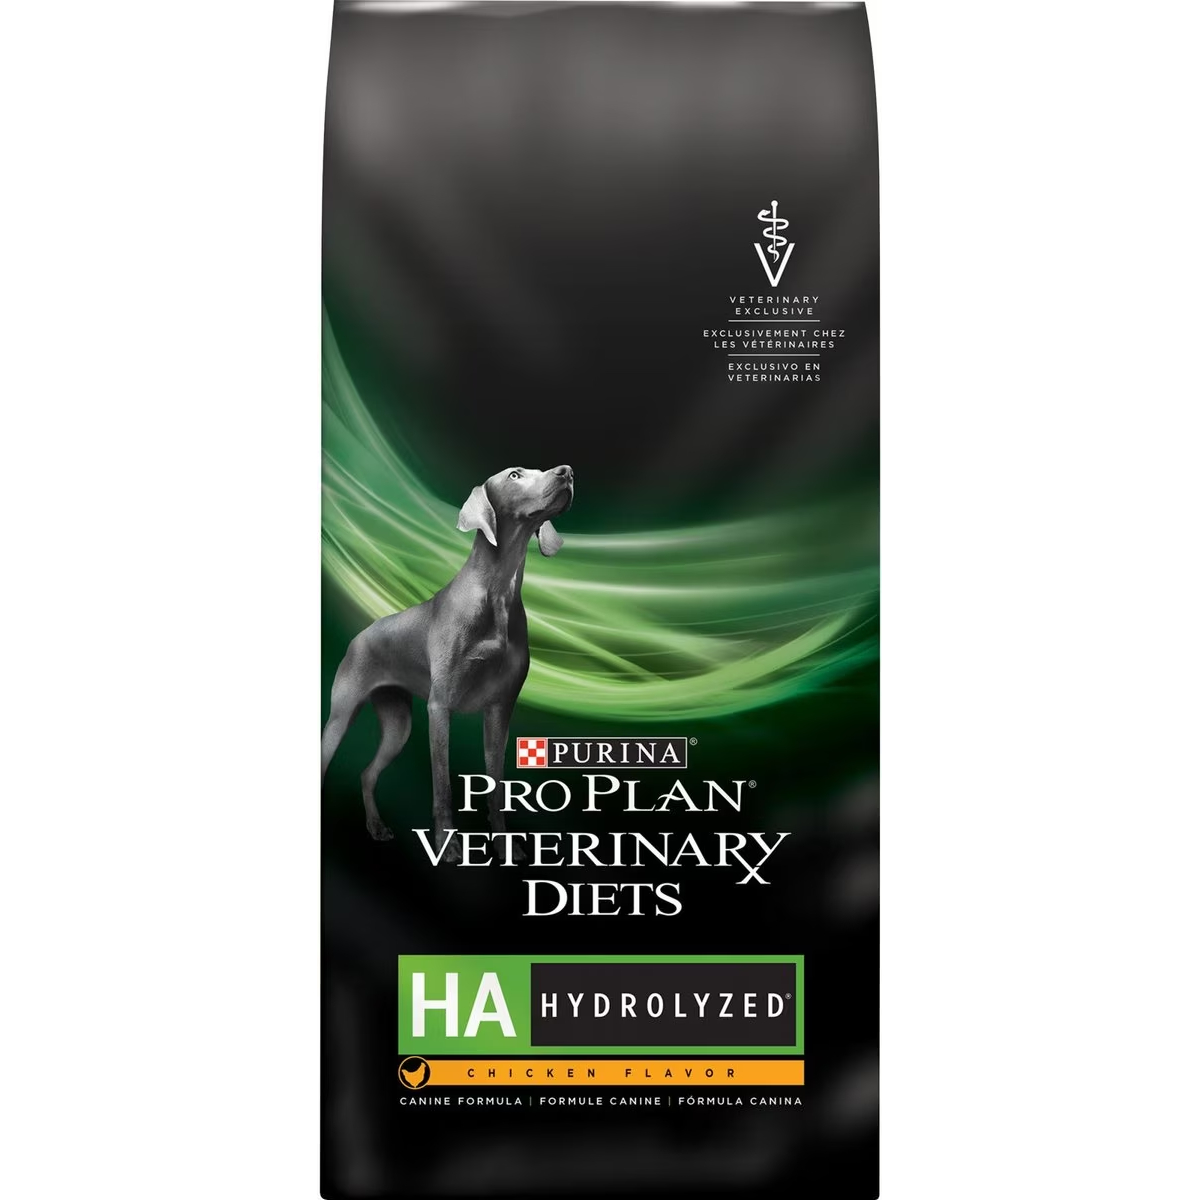 Purina Pro Plan Veterinary Diets HA Hydrolyzed Chicken Flavor Dry Dog Food 